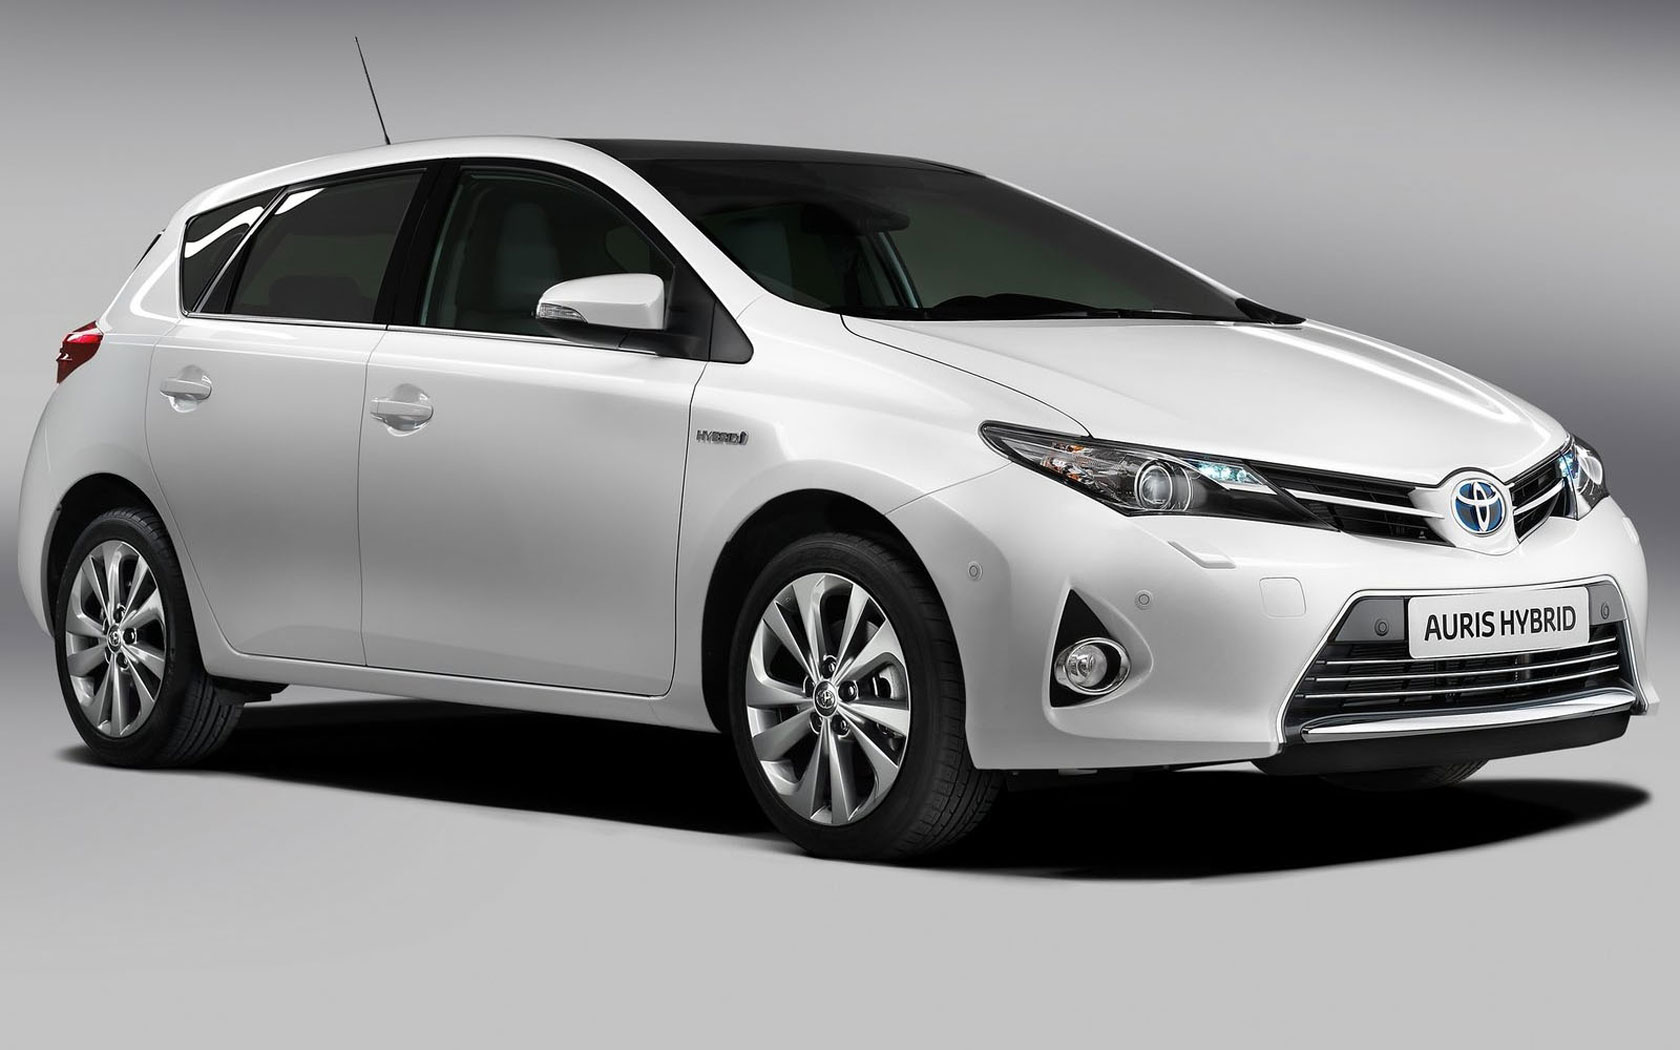  Toyota Auris (2012-2015)